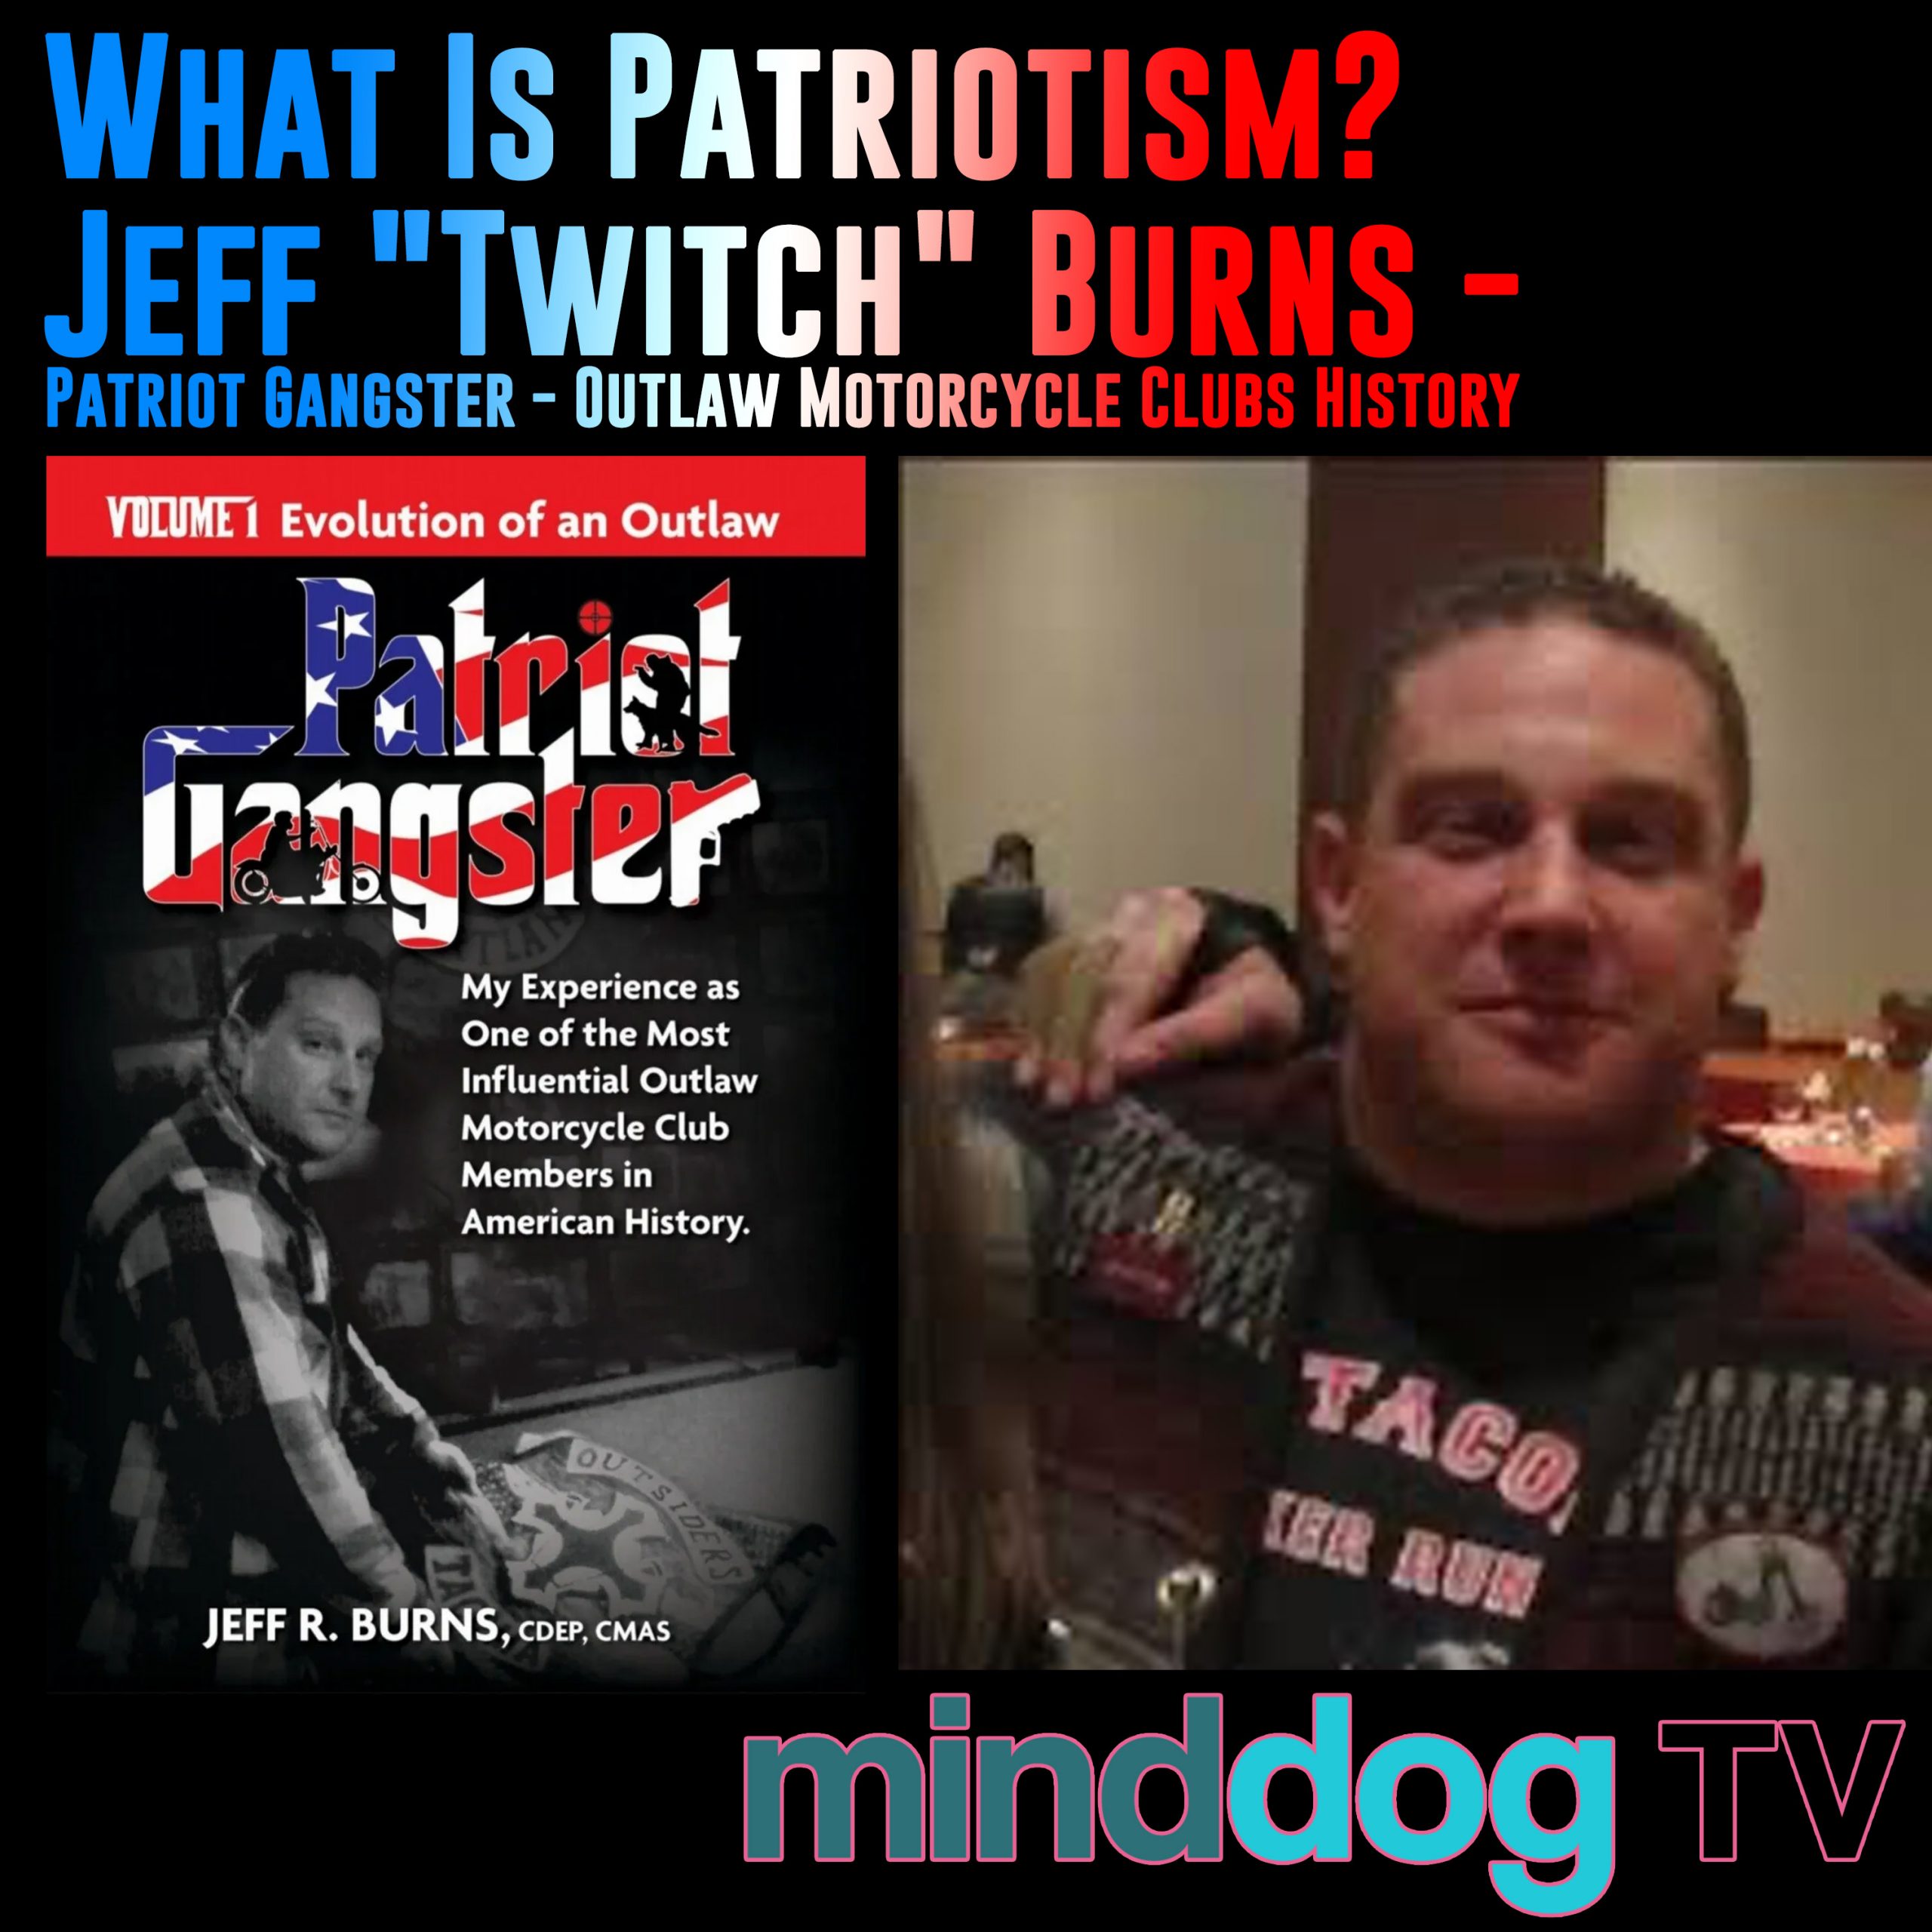 Jeff twitch Burns Patriot Gangster